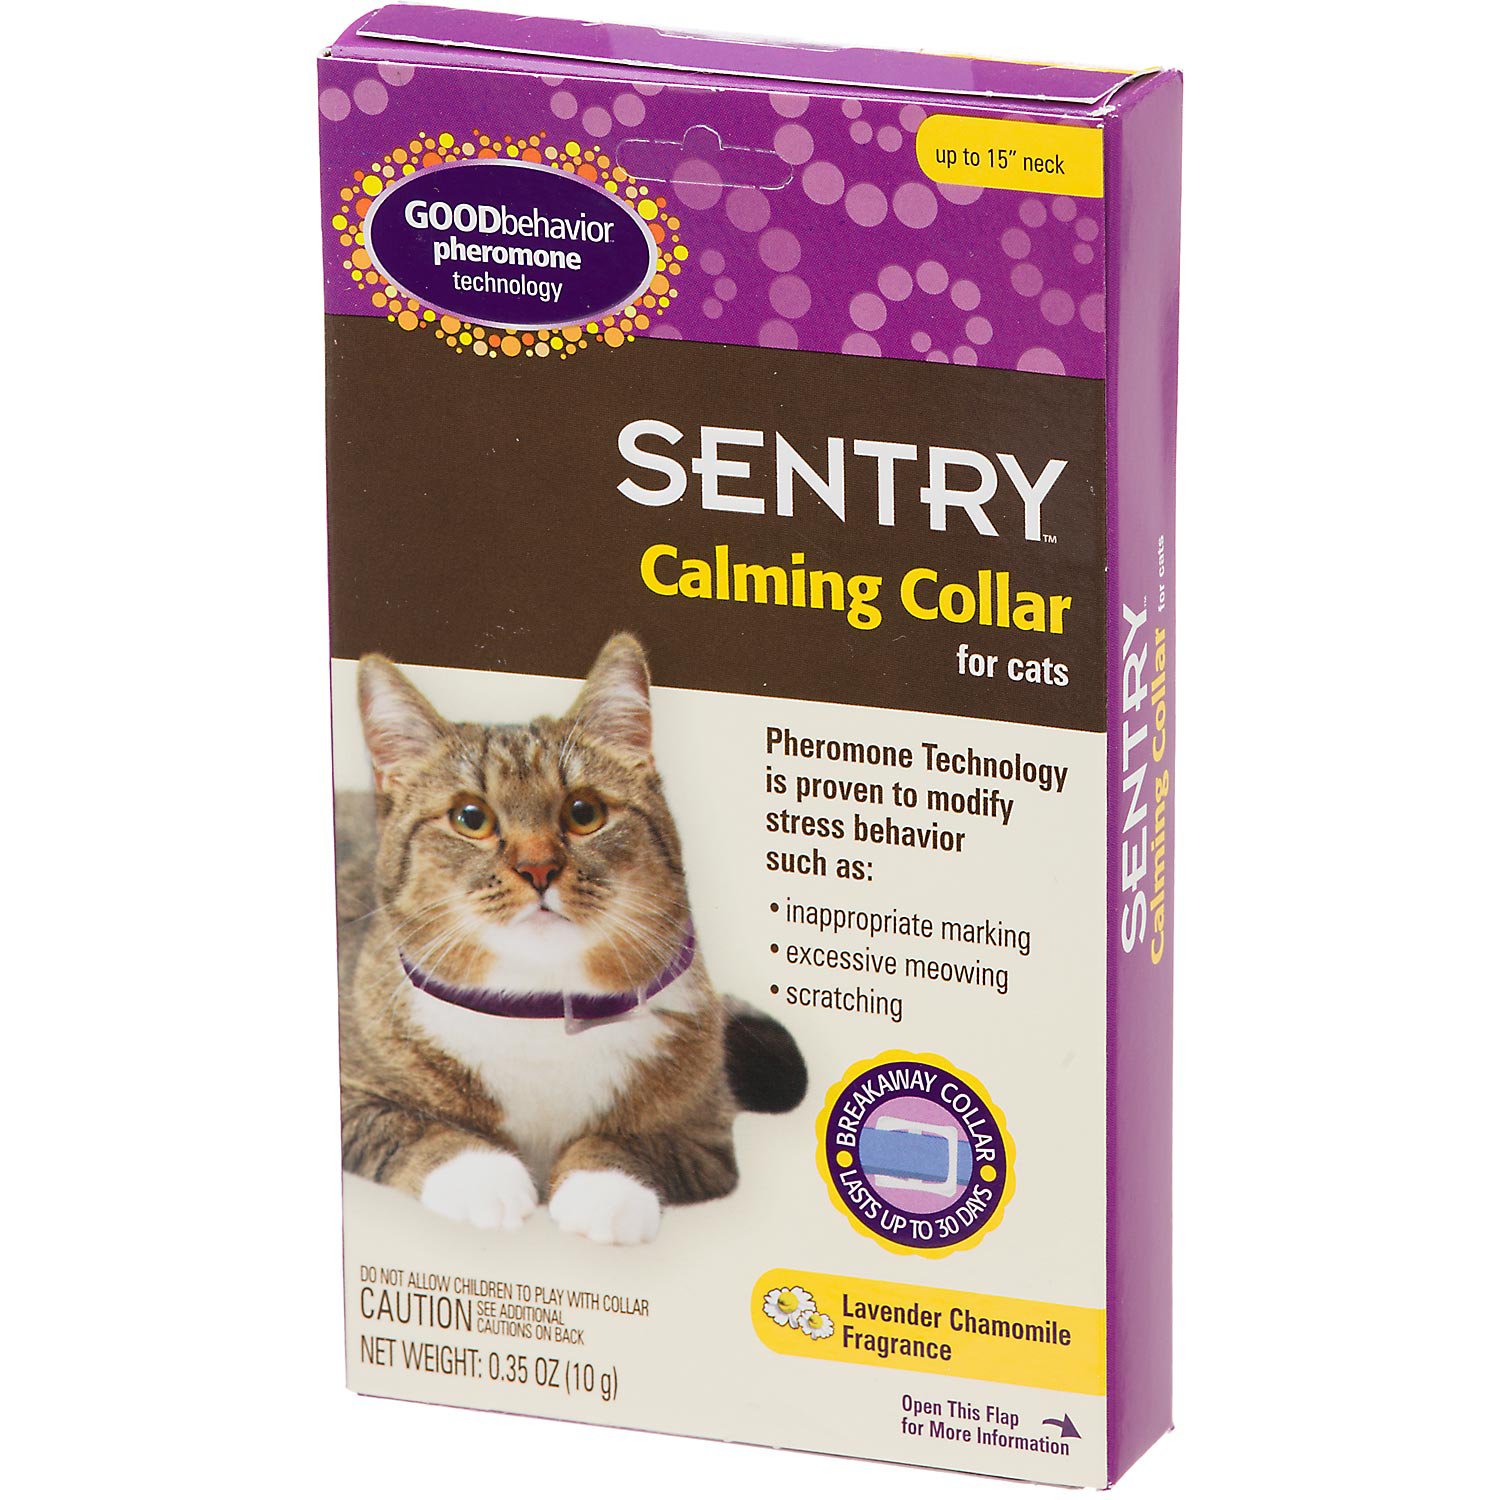 Sentry Calming Collar for Cats Petco